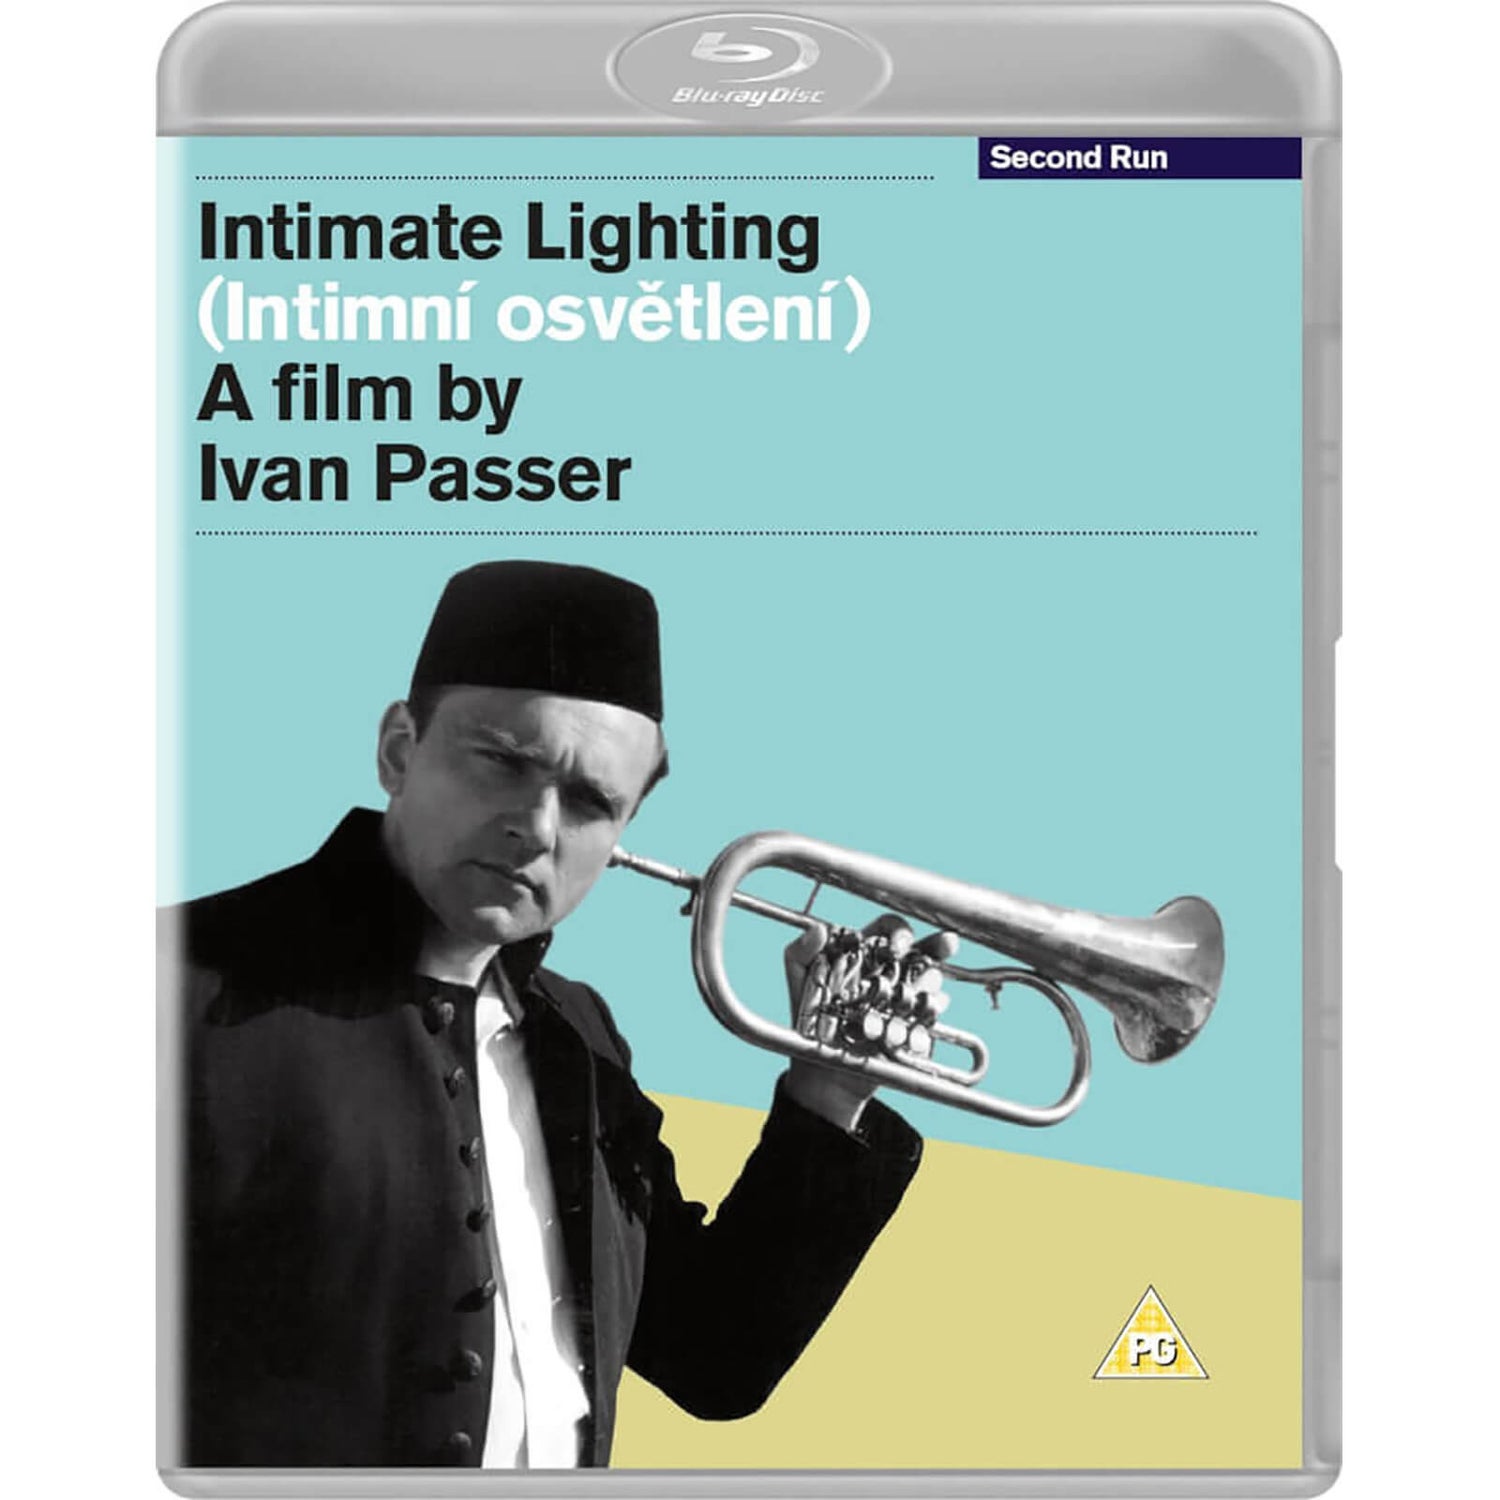 Intimate Lighting Blu-ray